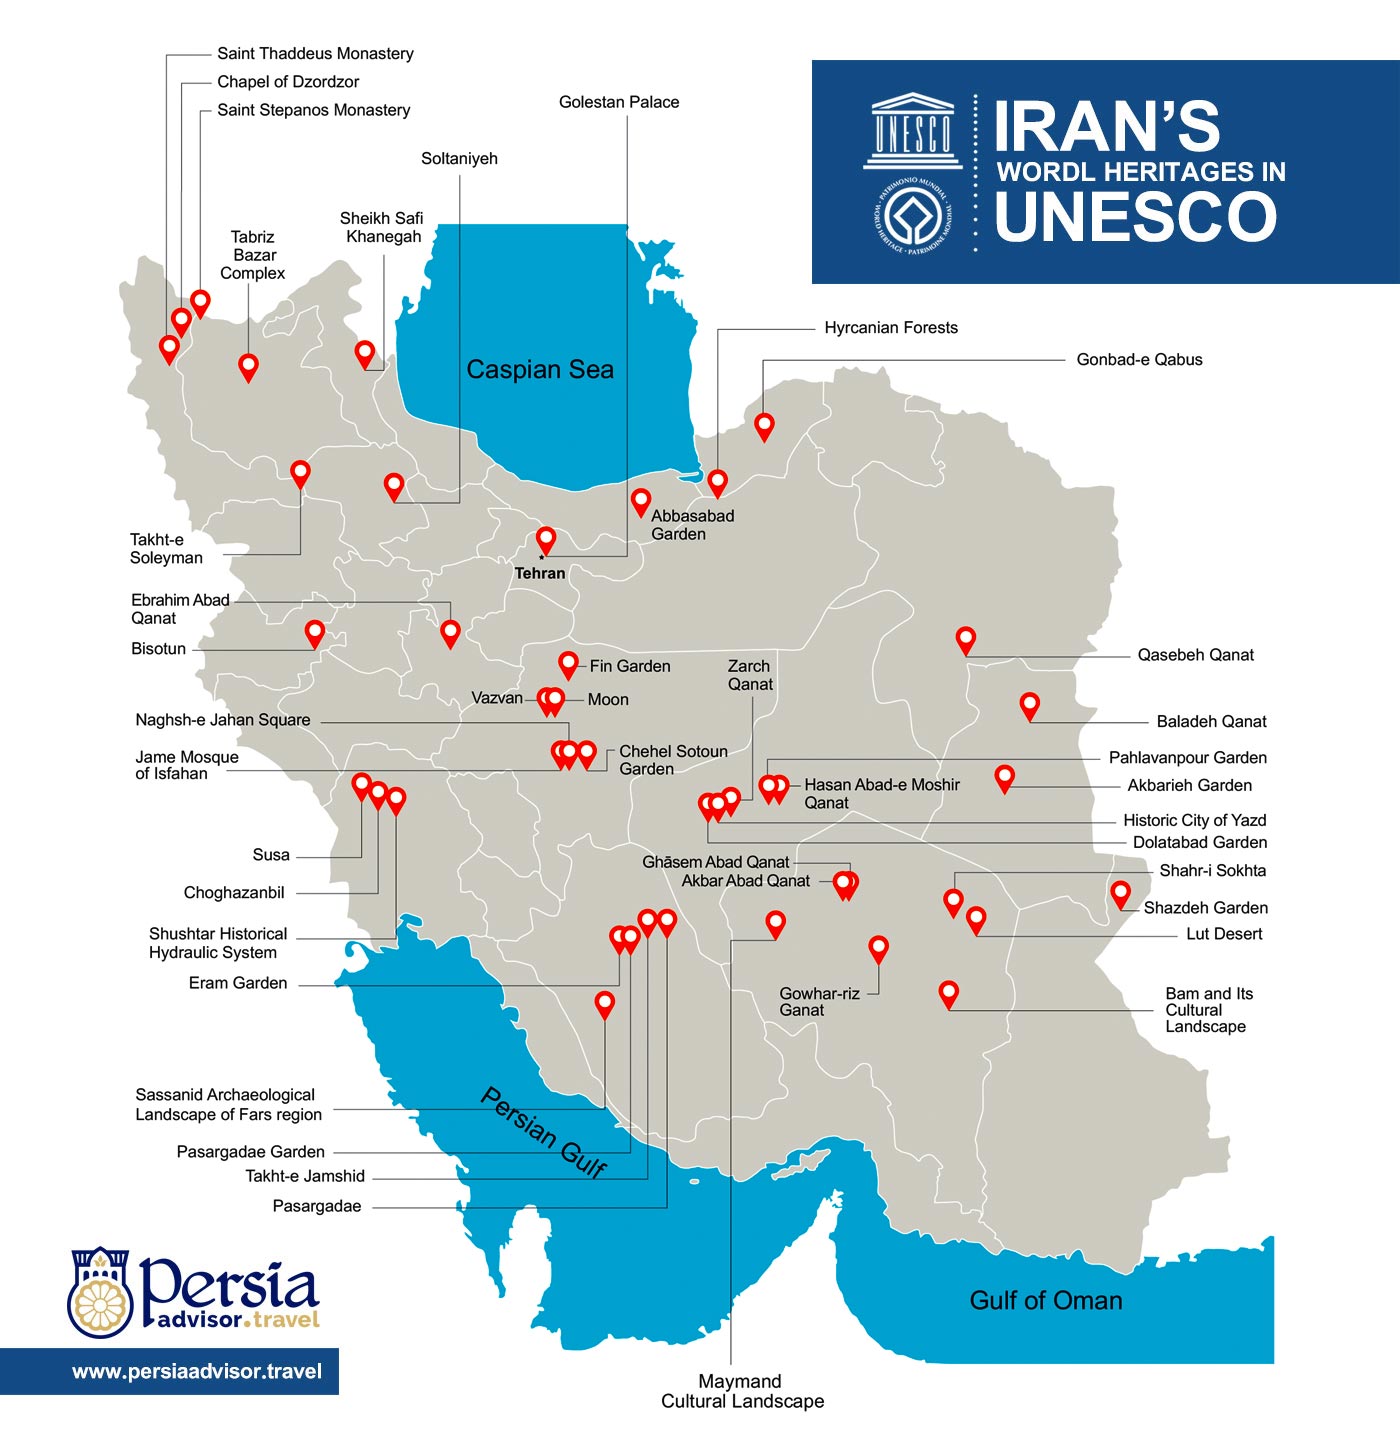 Iran’s Heritages in UNESCO - Persia Advisor Travels (Updated 2019-09-16)